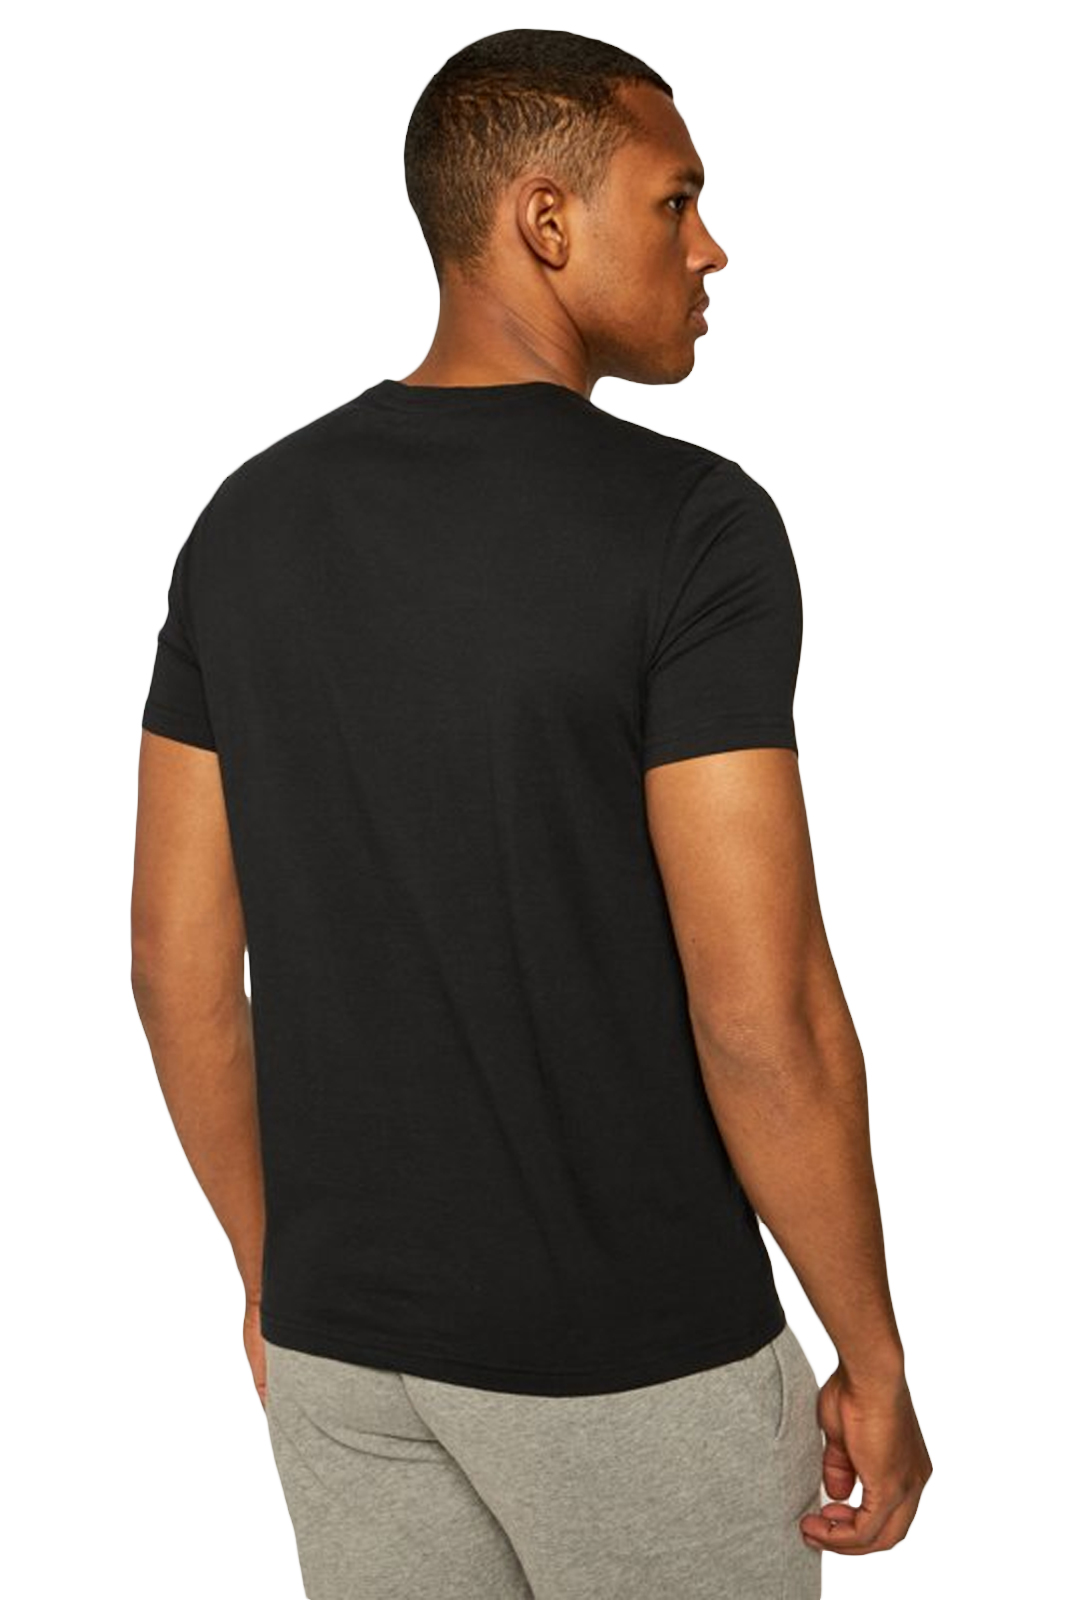 Tee-shirt noir manches courtes & col rond EA7 homme 211818